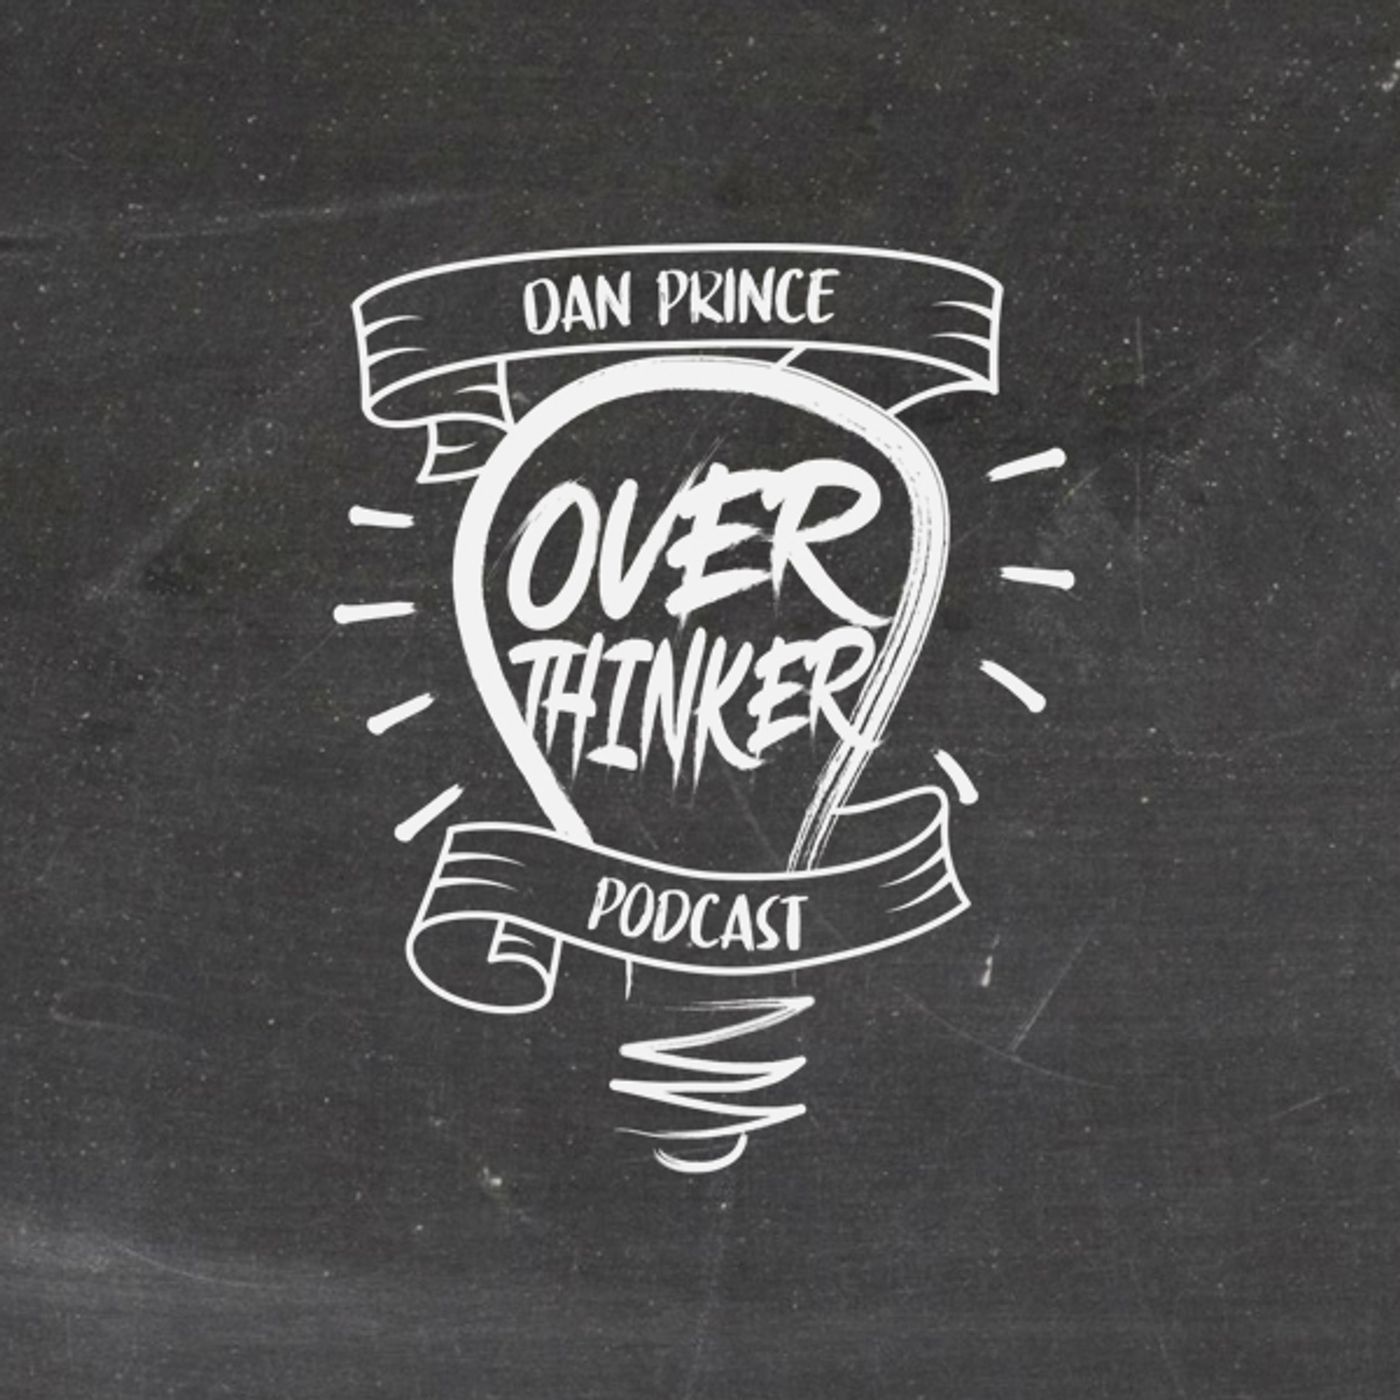 Over Thinker – Dan Prince Podcast